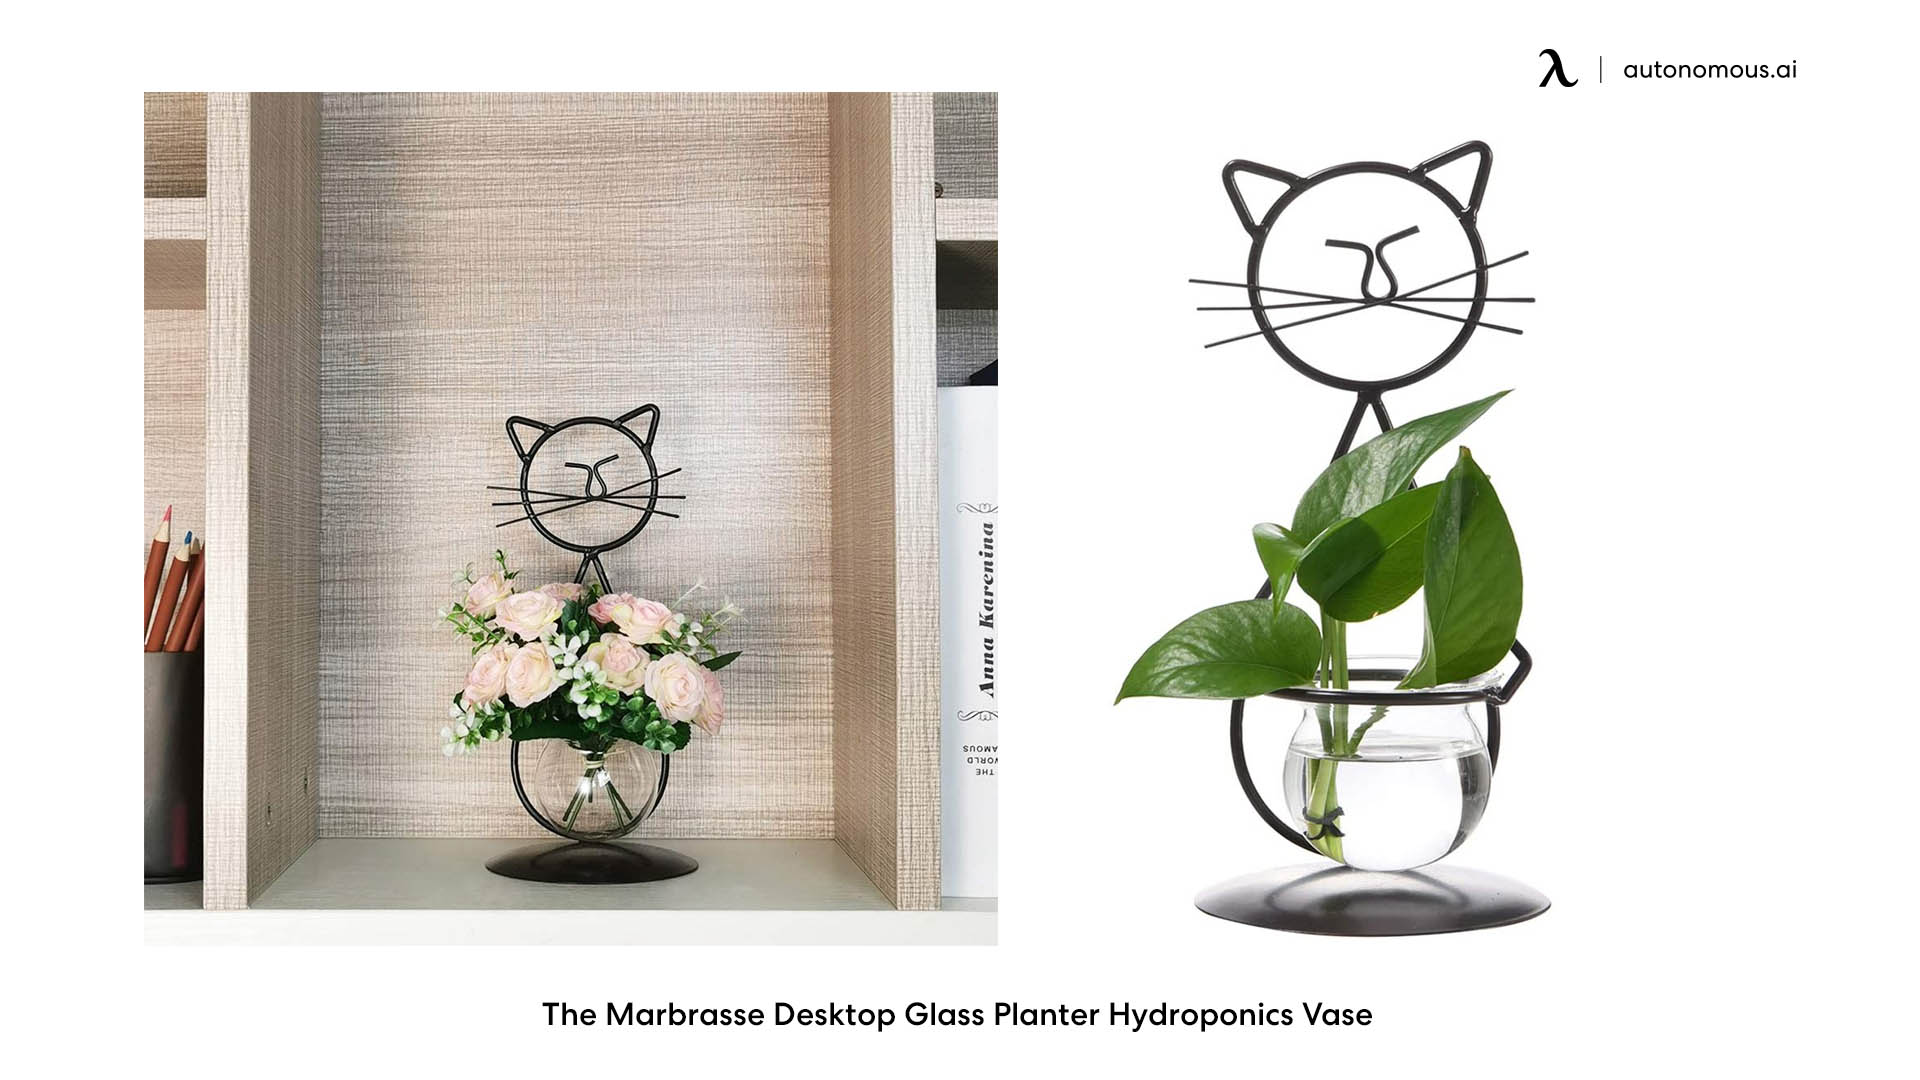 The Marbrasse Desktop Glass Planter Hydroponics Vase